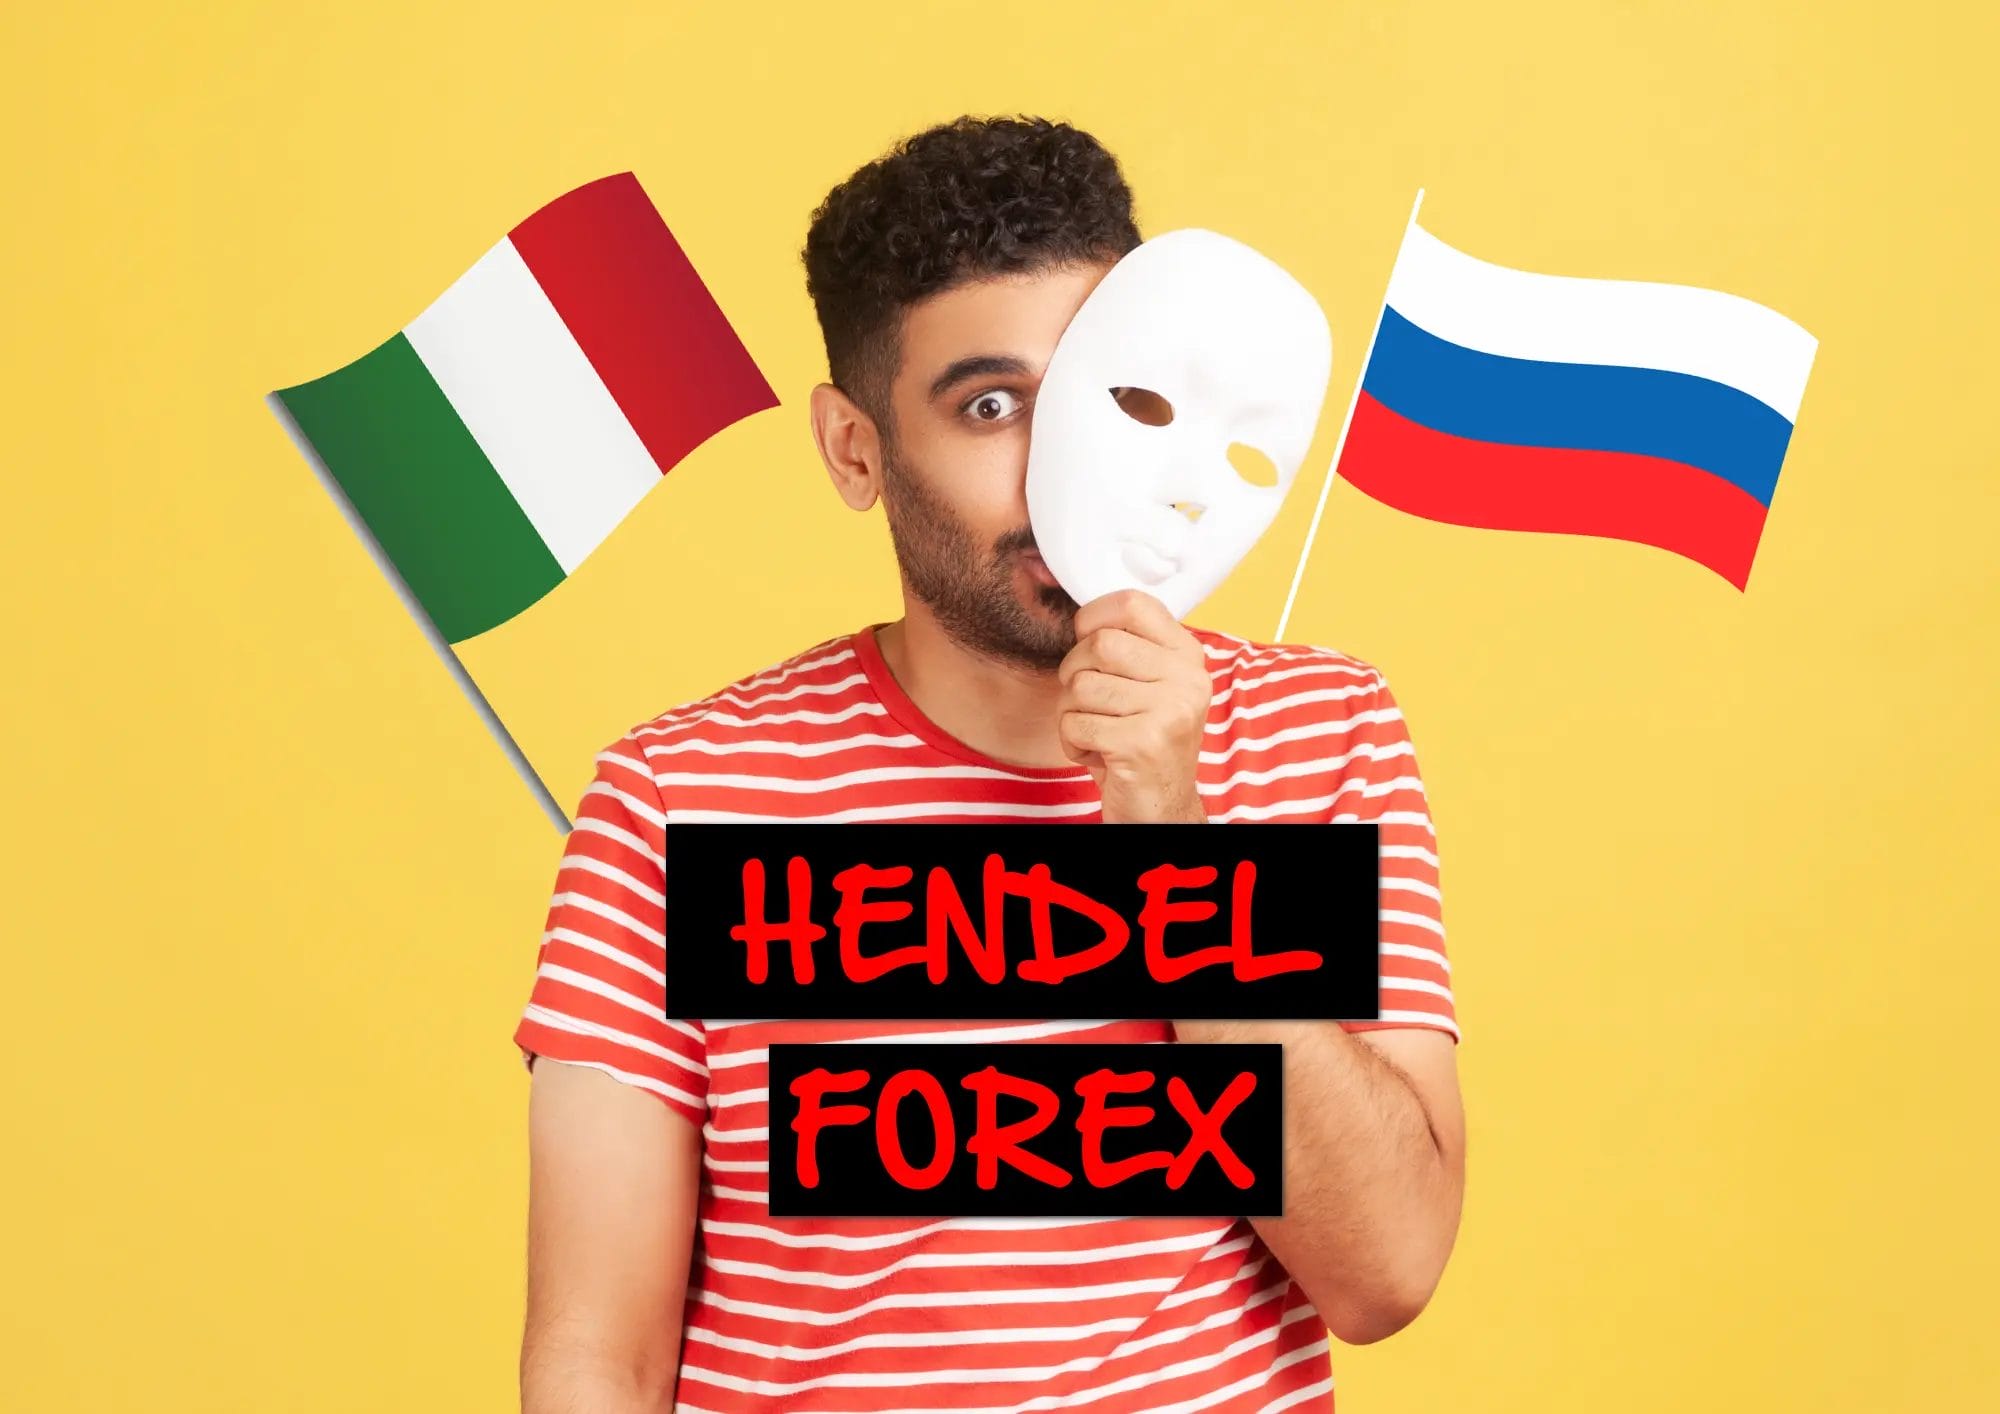 Hendel For Ex Original: Italy, Rusia atau Tangerang?